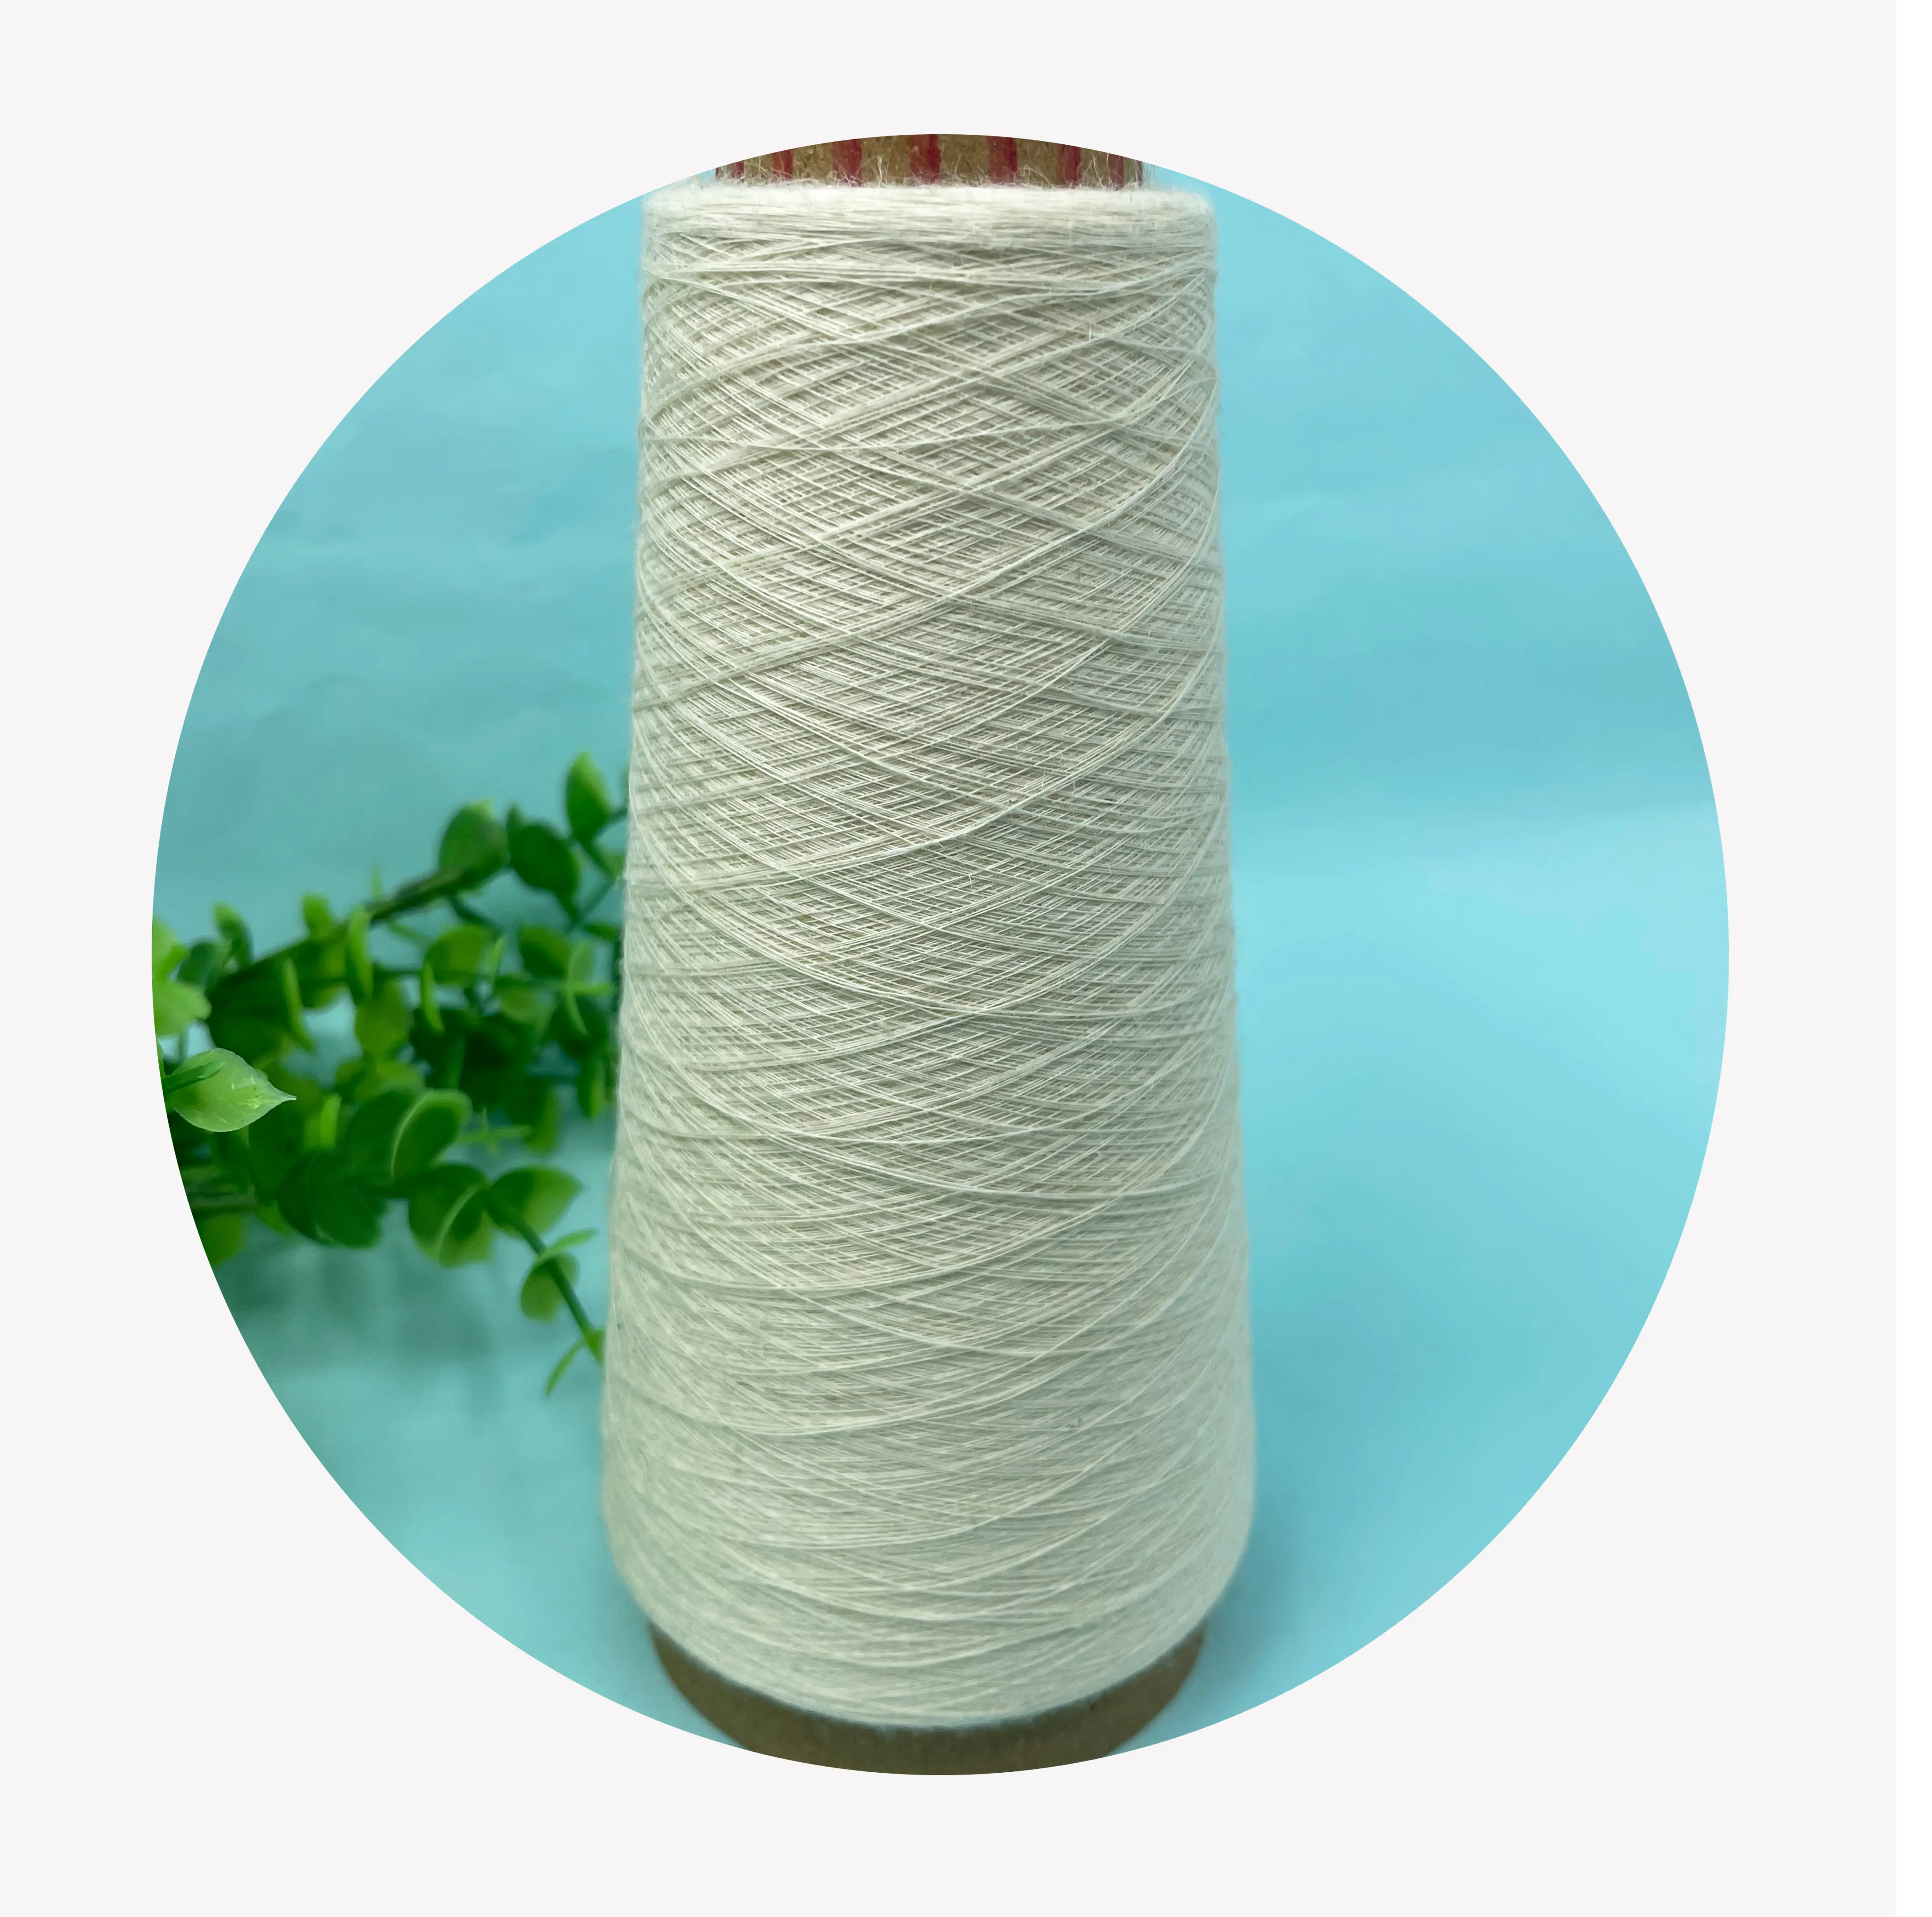 China manufacturer hemp cotton yarn for knitting weaving